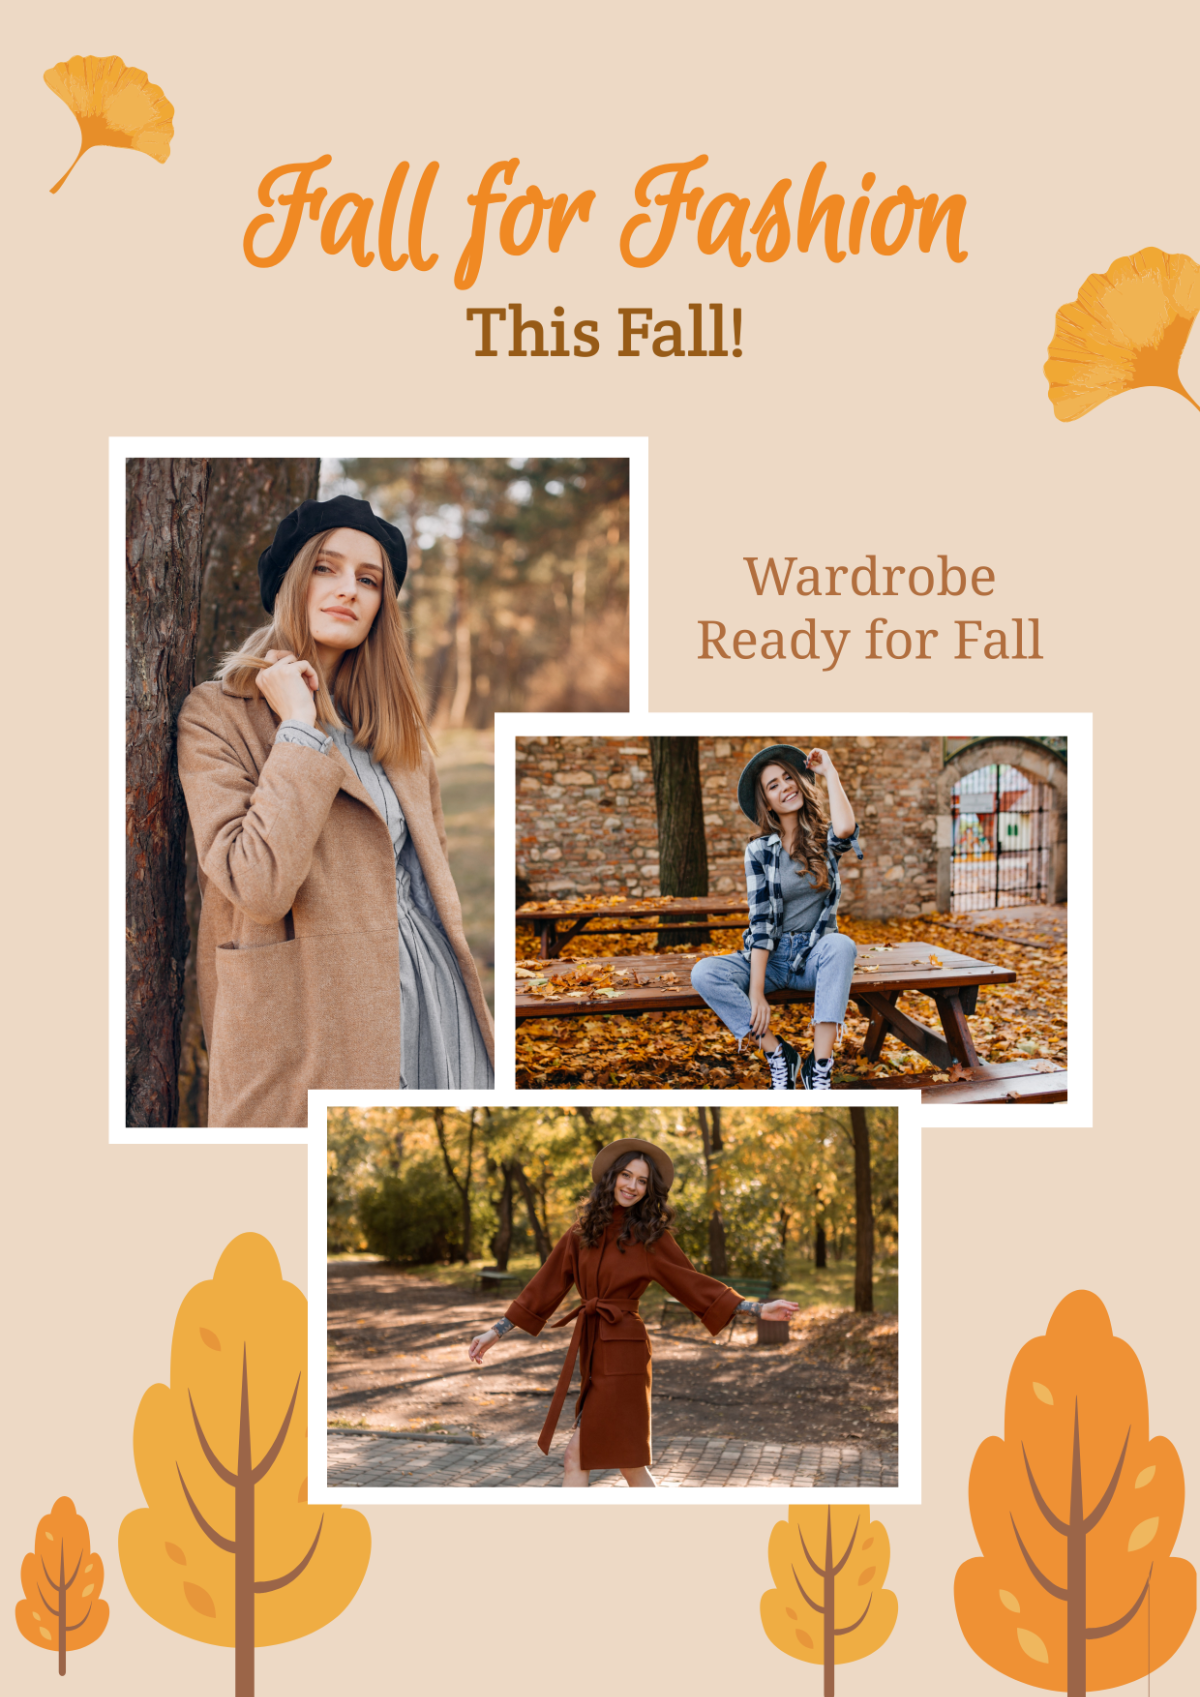 Fall Fashion Sale Photo Collage